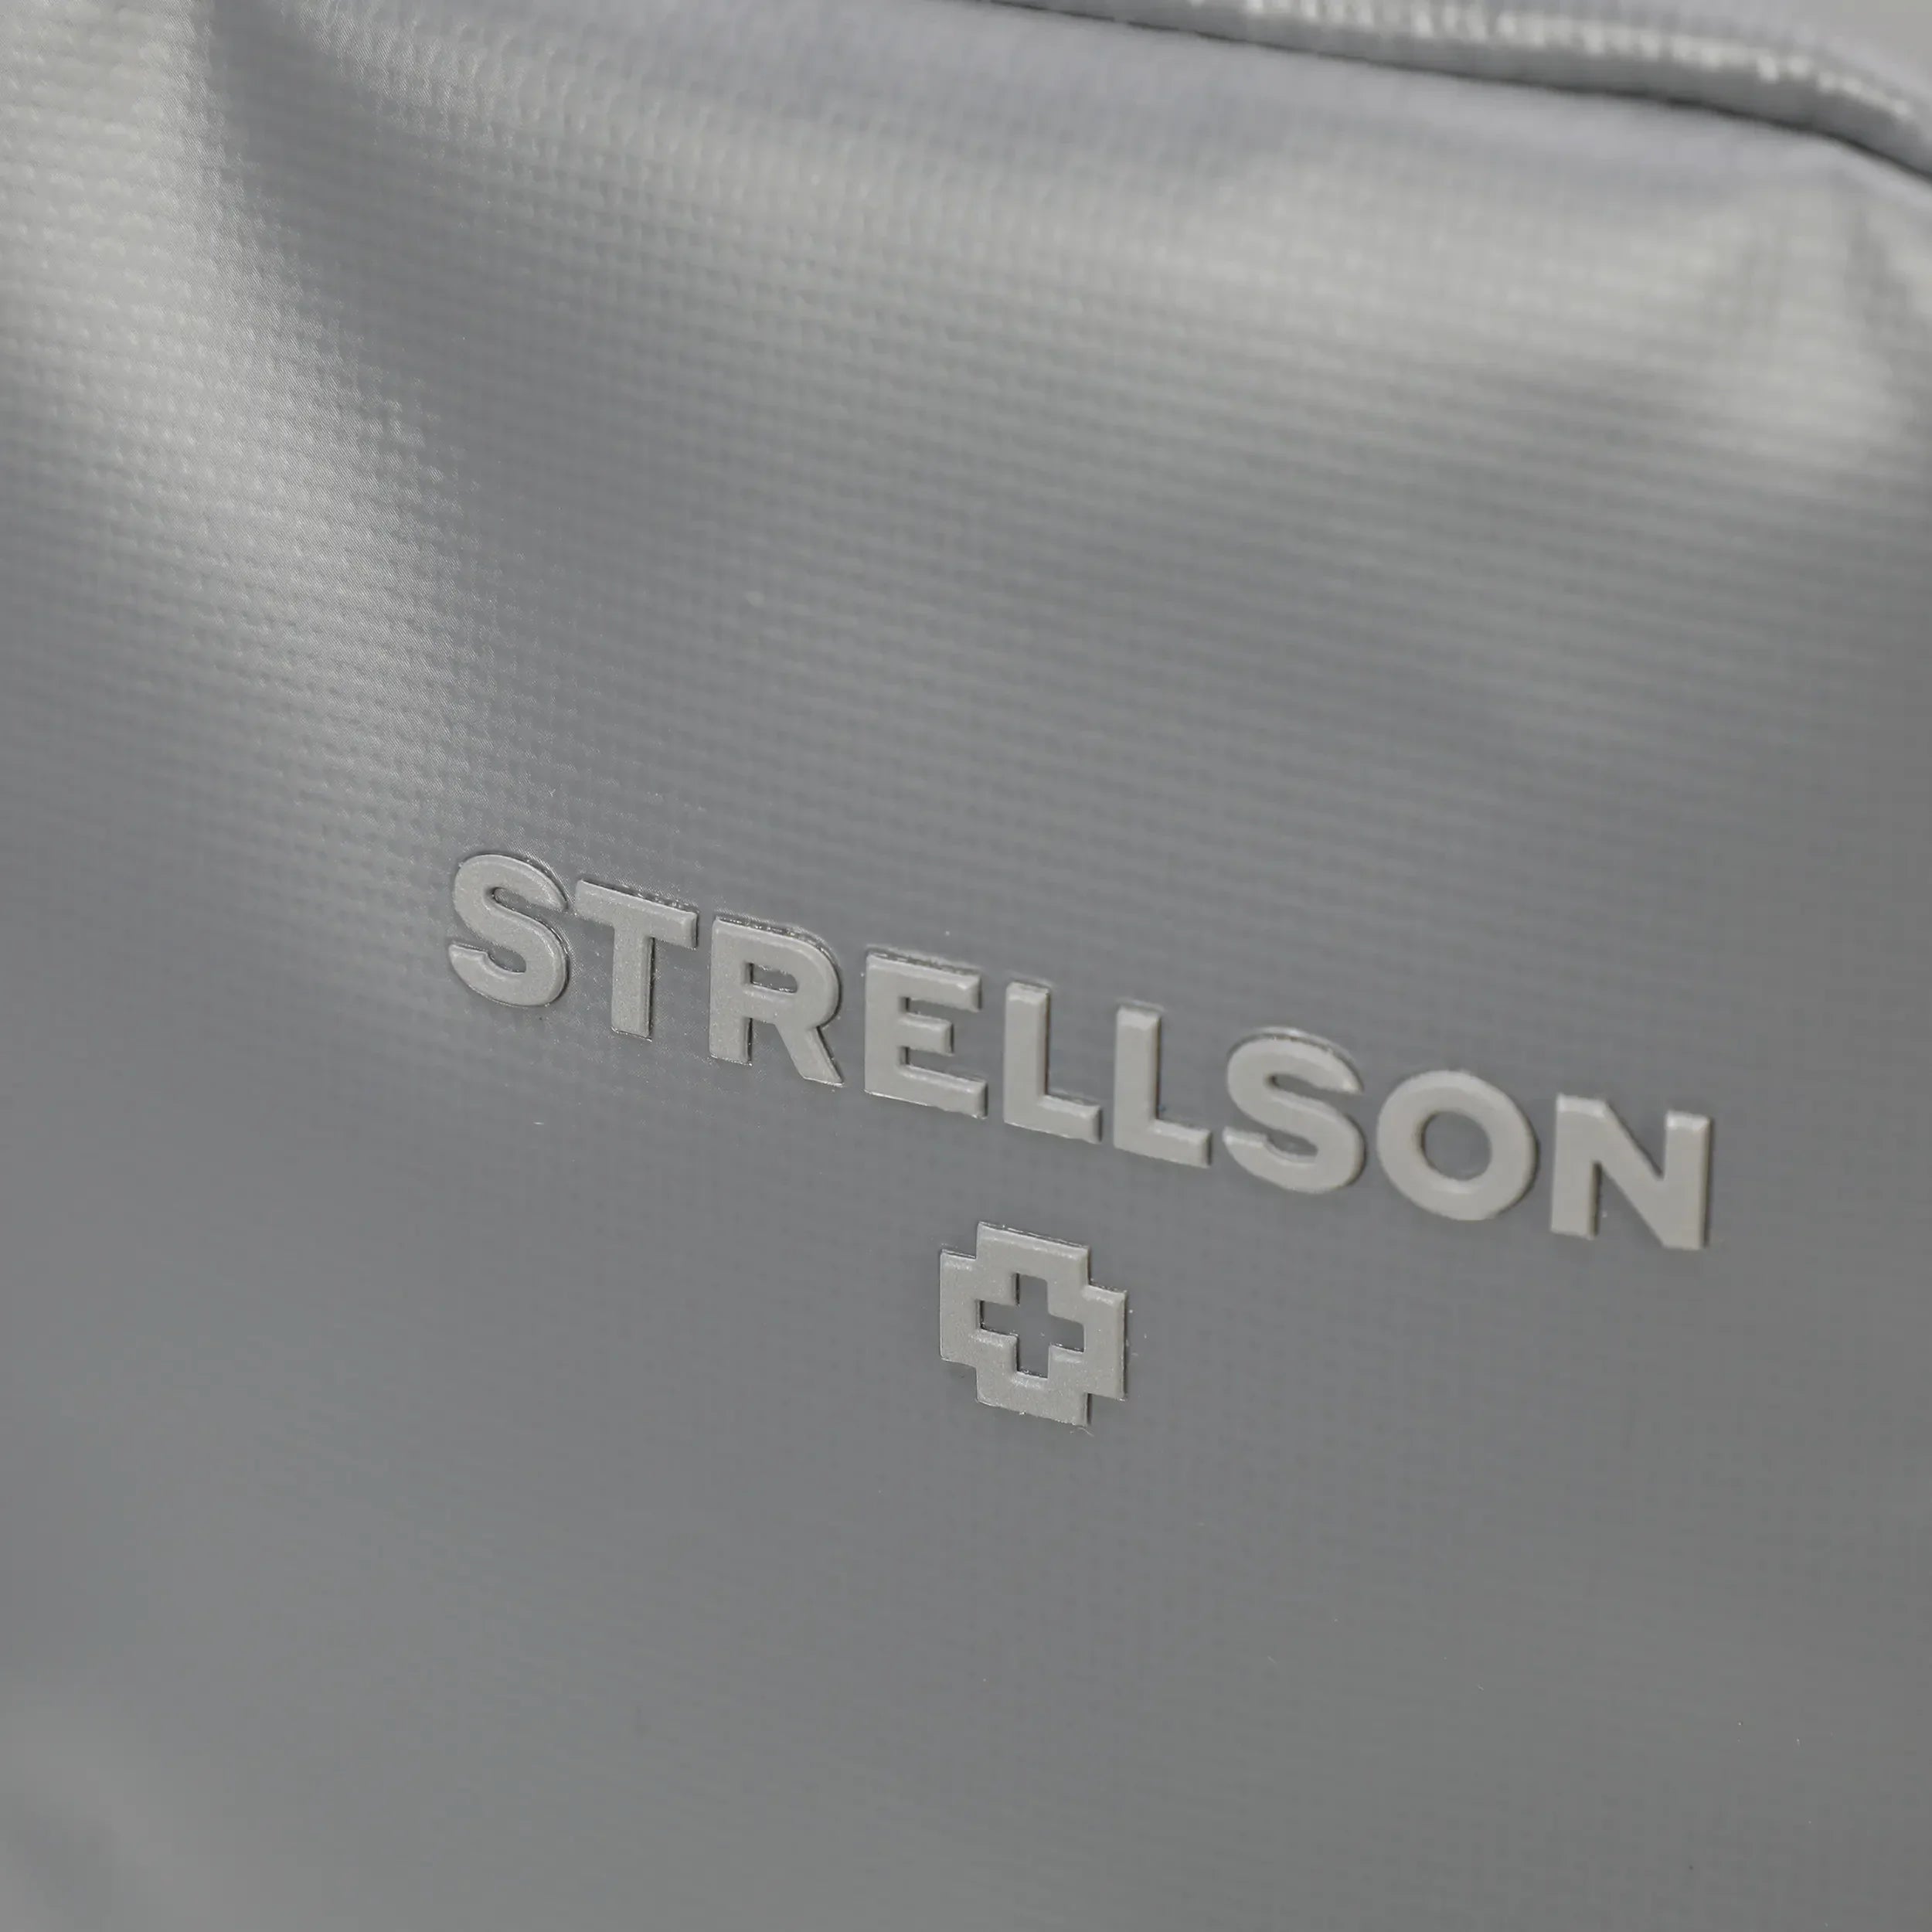 Strellson Stockwell 2.0 Marcus Shoulderbag XSVZ 21 cm - Khaki